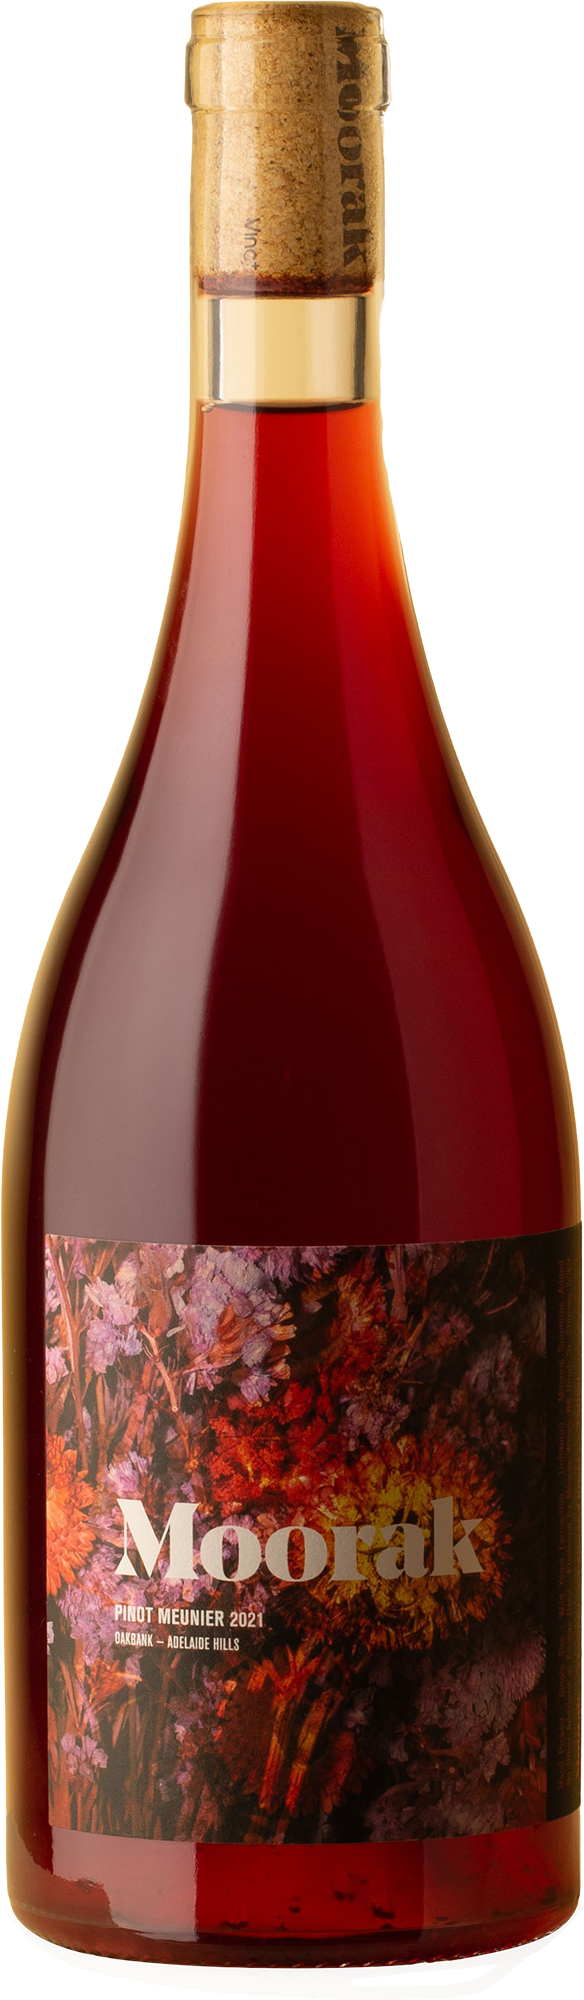 Moorak - Oakbank Pinot Meunier 2021 Red Wine